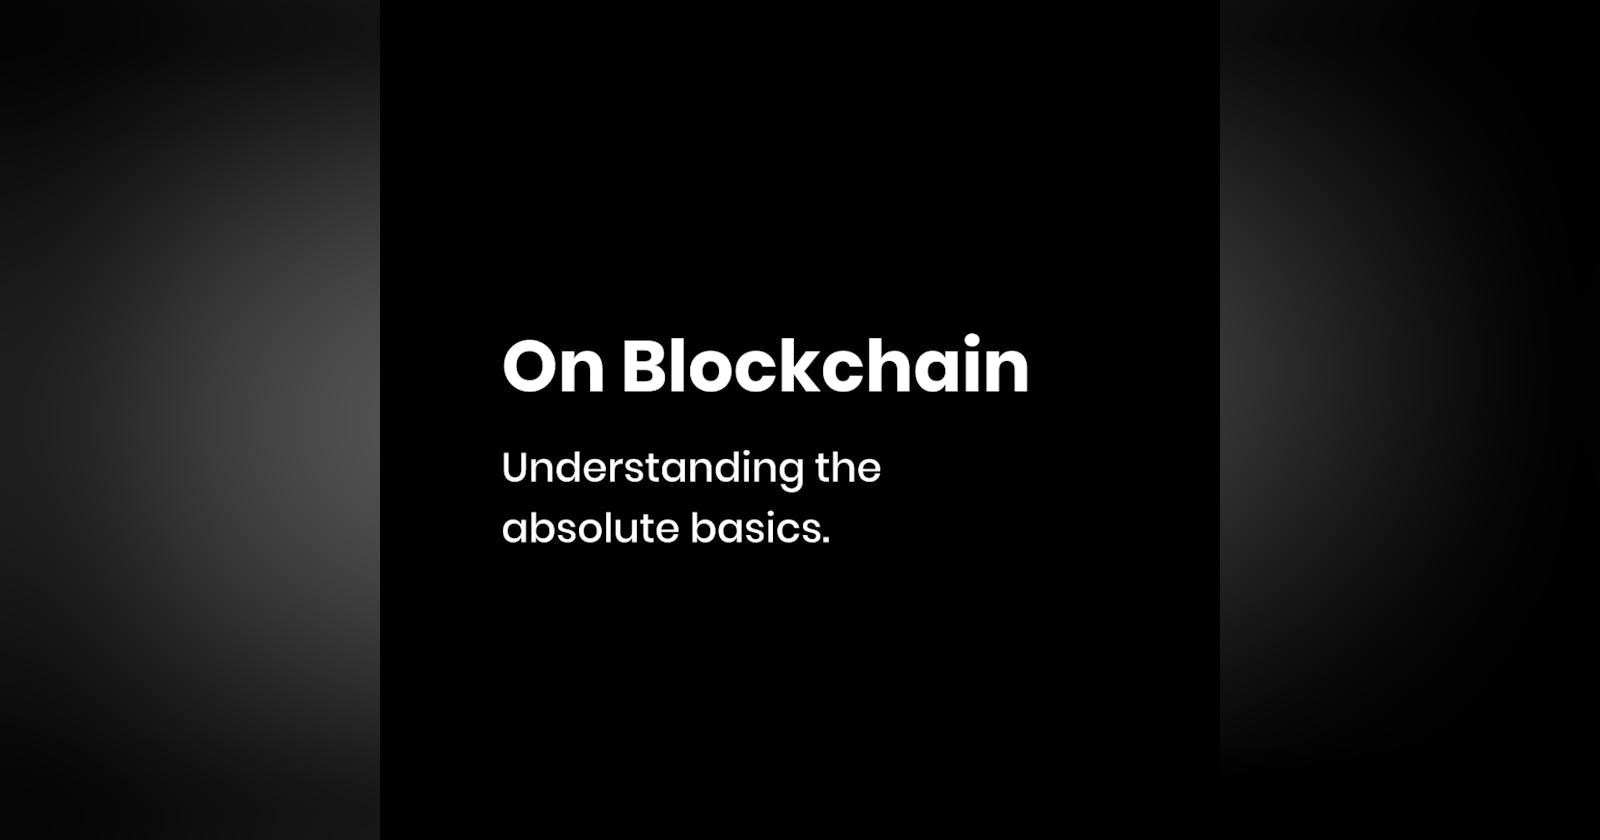 On Blockchain — Understanding the absolute basics.